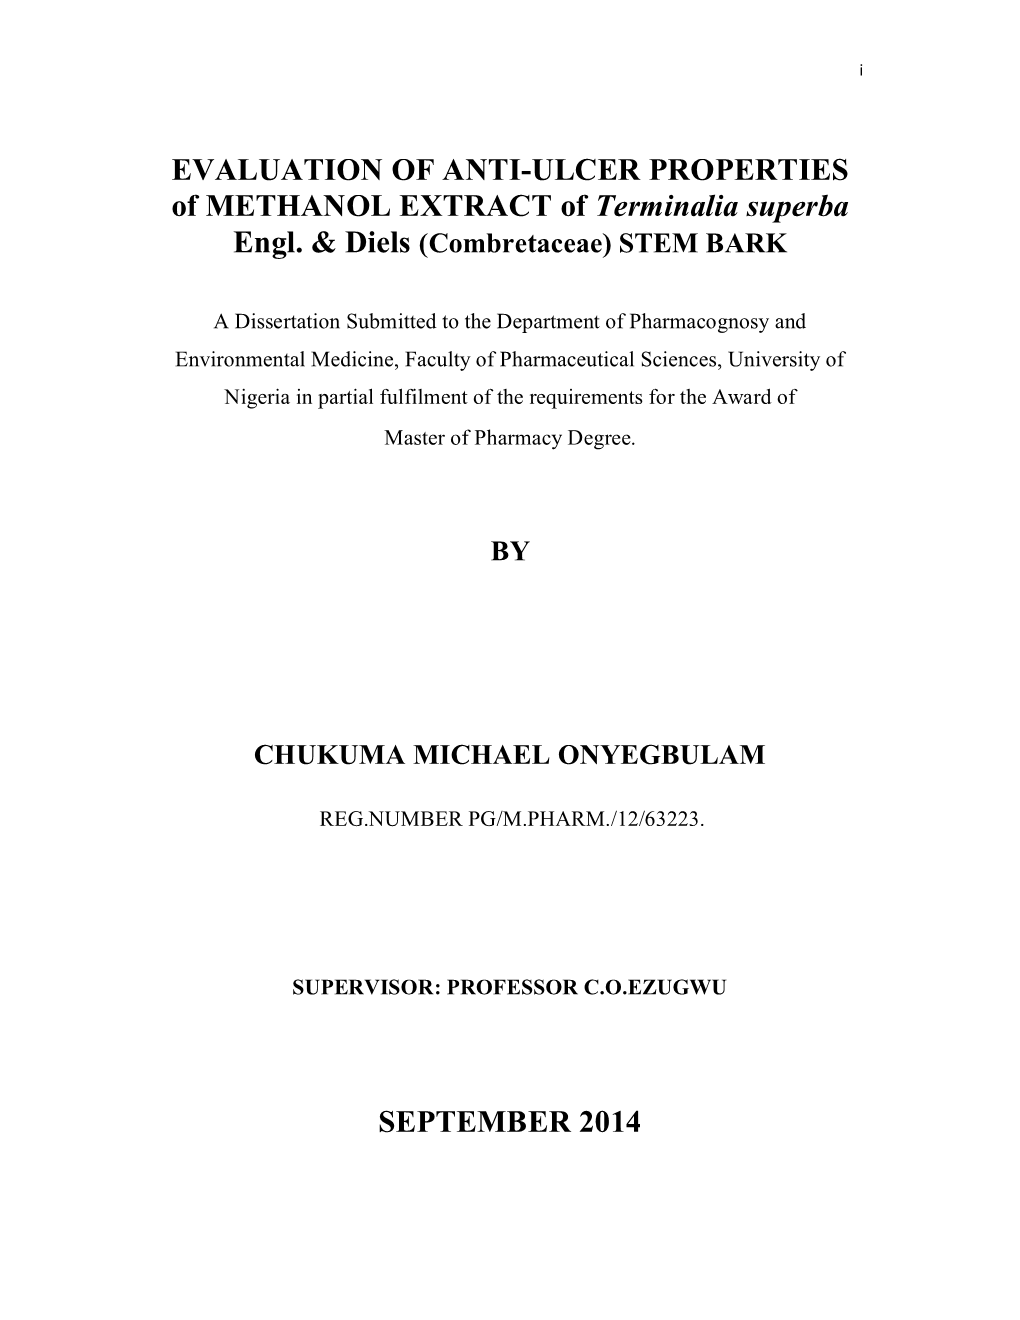 EVALUATION of ANTI-ULCER PROPERTIES of METHANOL EXTRACT of Terminalia Superba SEPTEMBER 2014